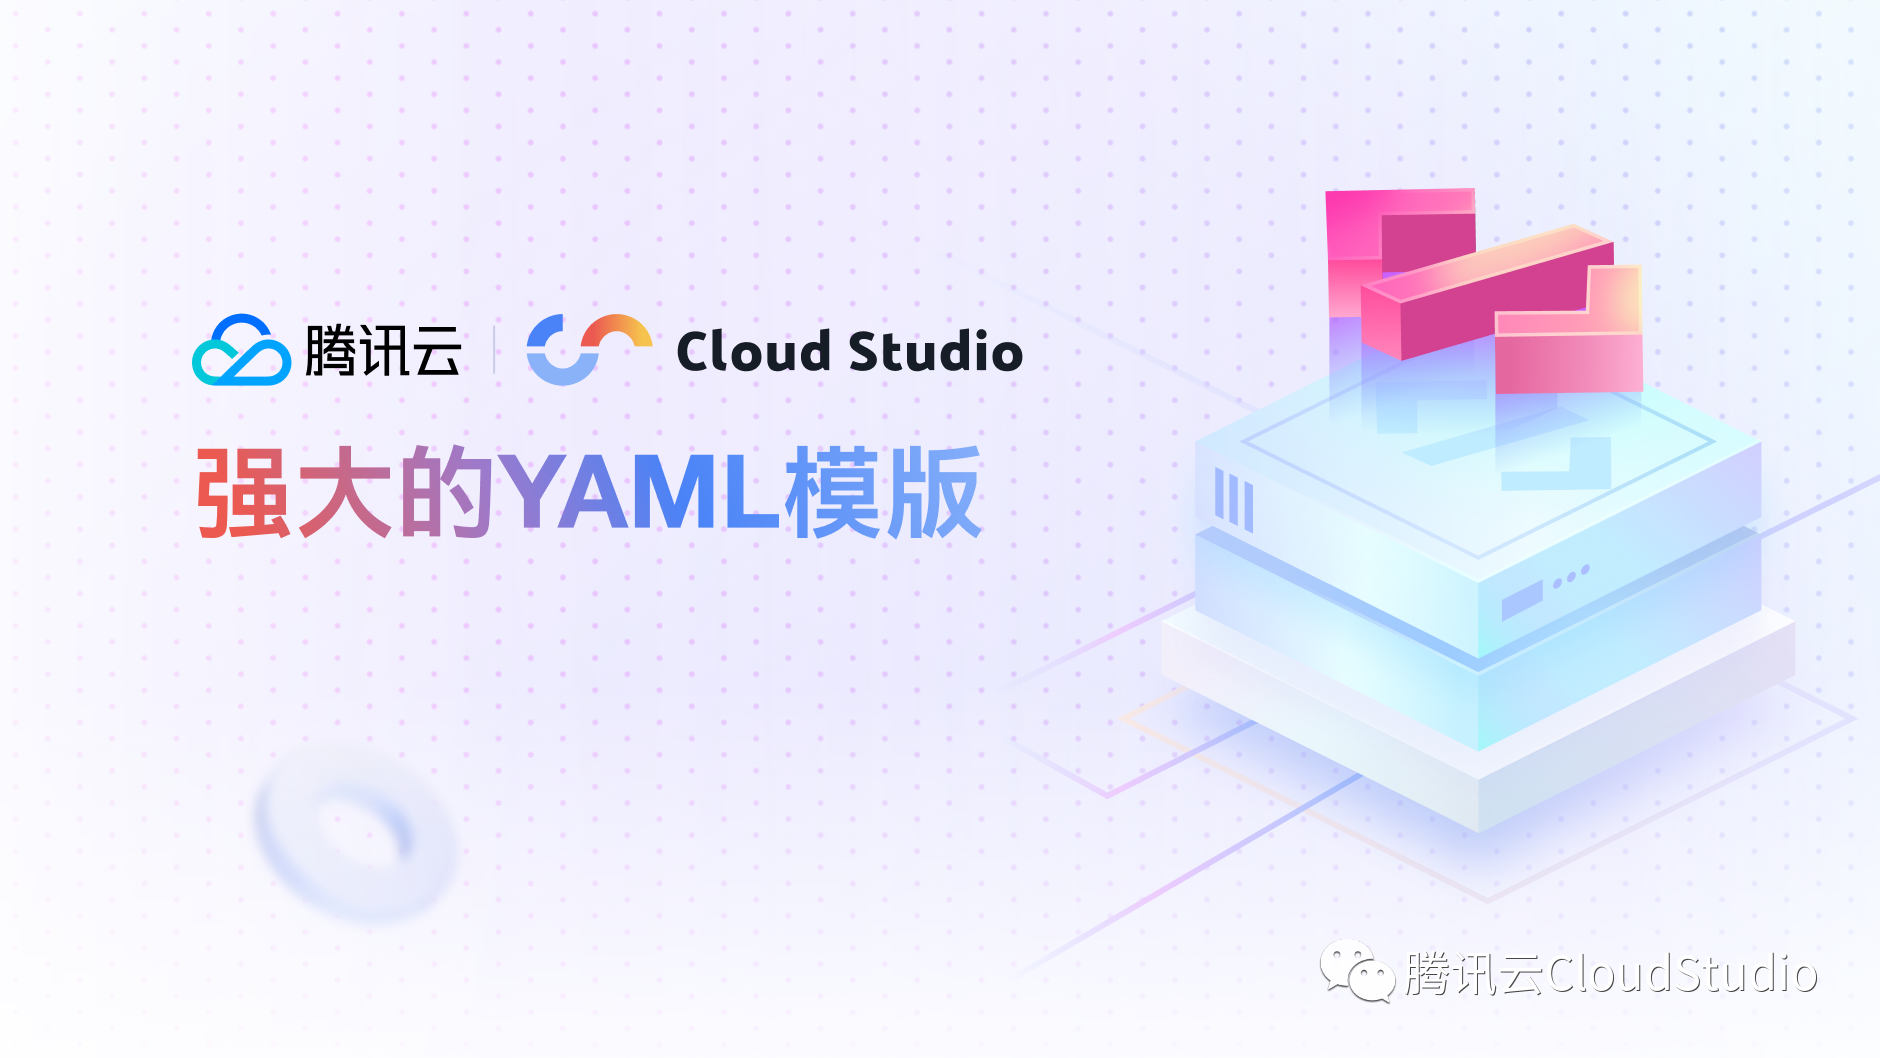 Cloud Studio 高阶玩家：强大的 YAML 模板